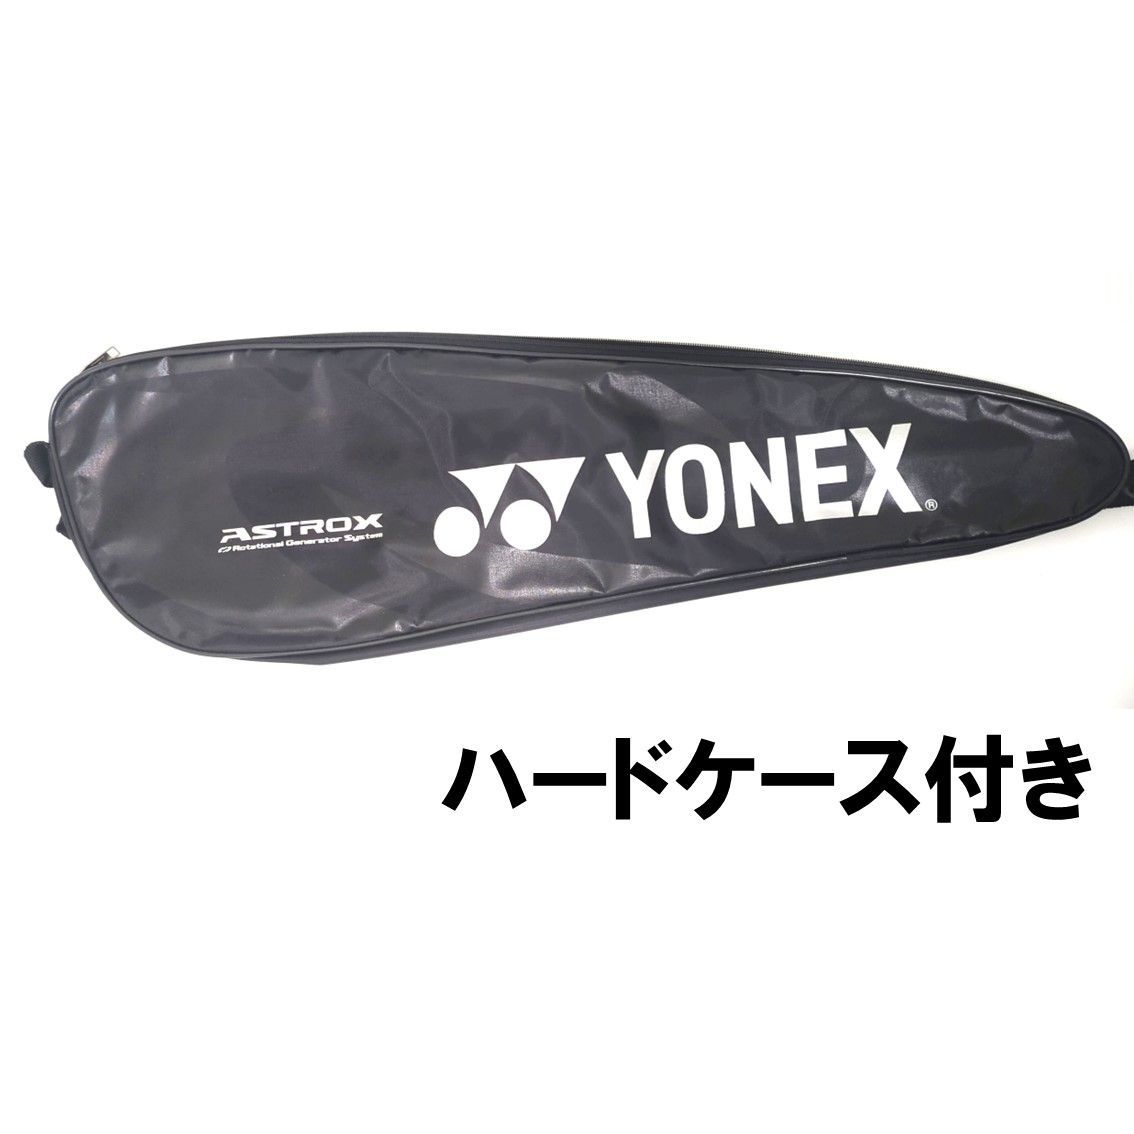 Astroxシリーズ最新/新品/ヨネックス/アストロクス ネクステージ 